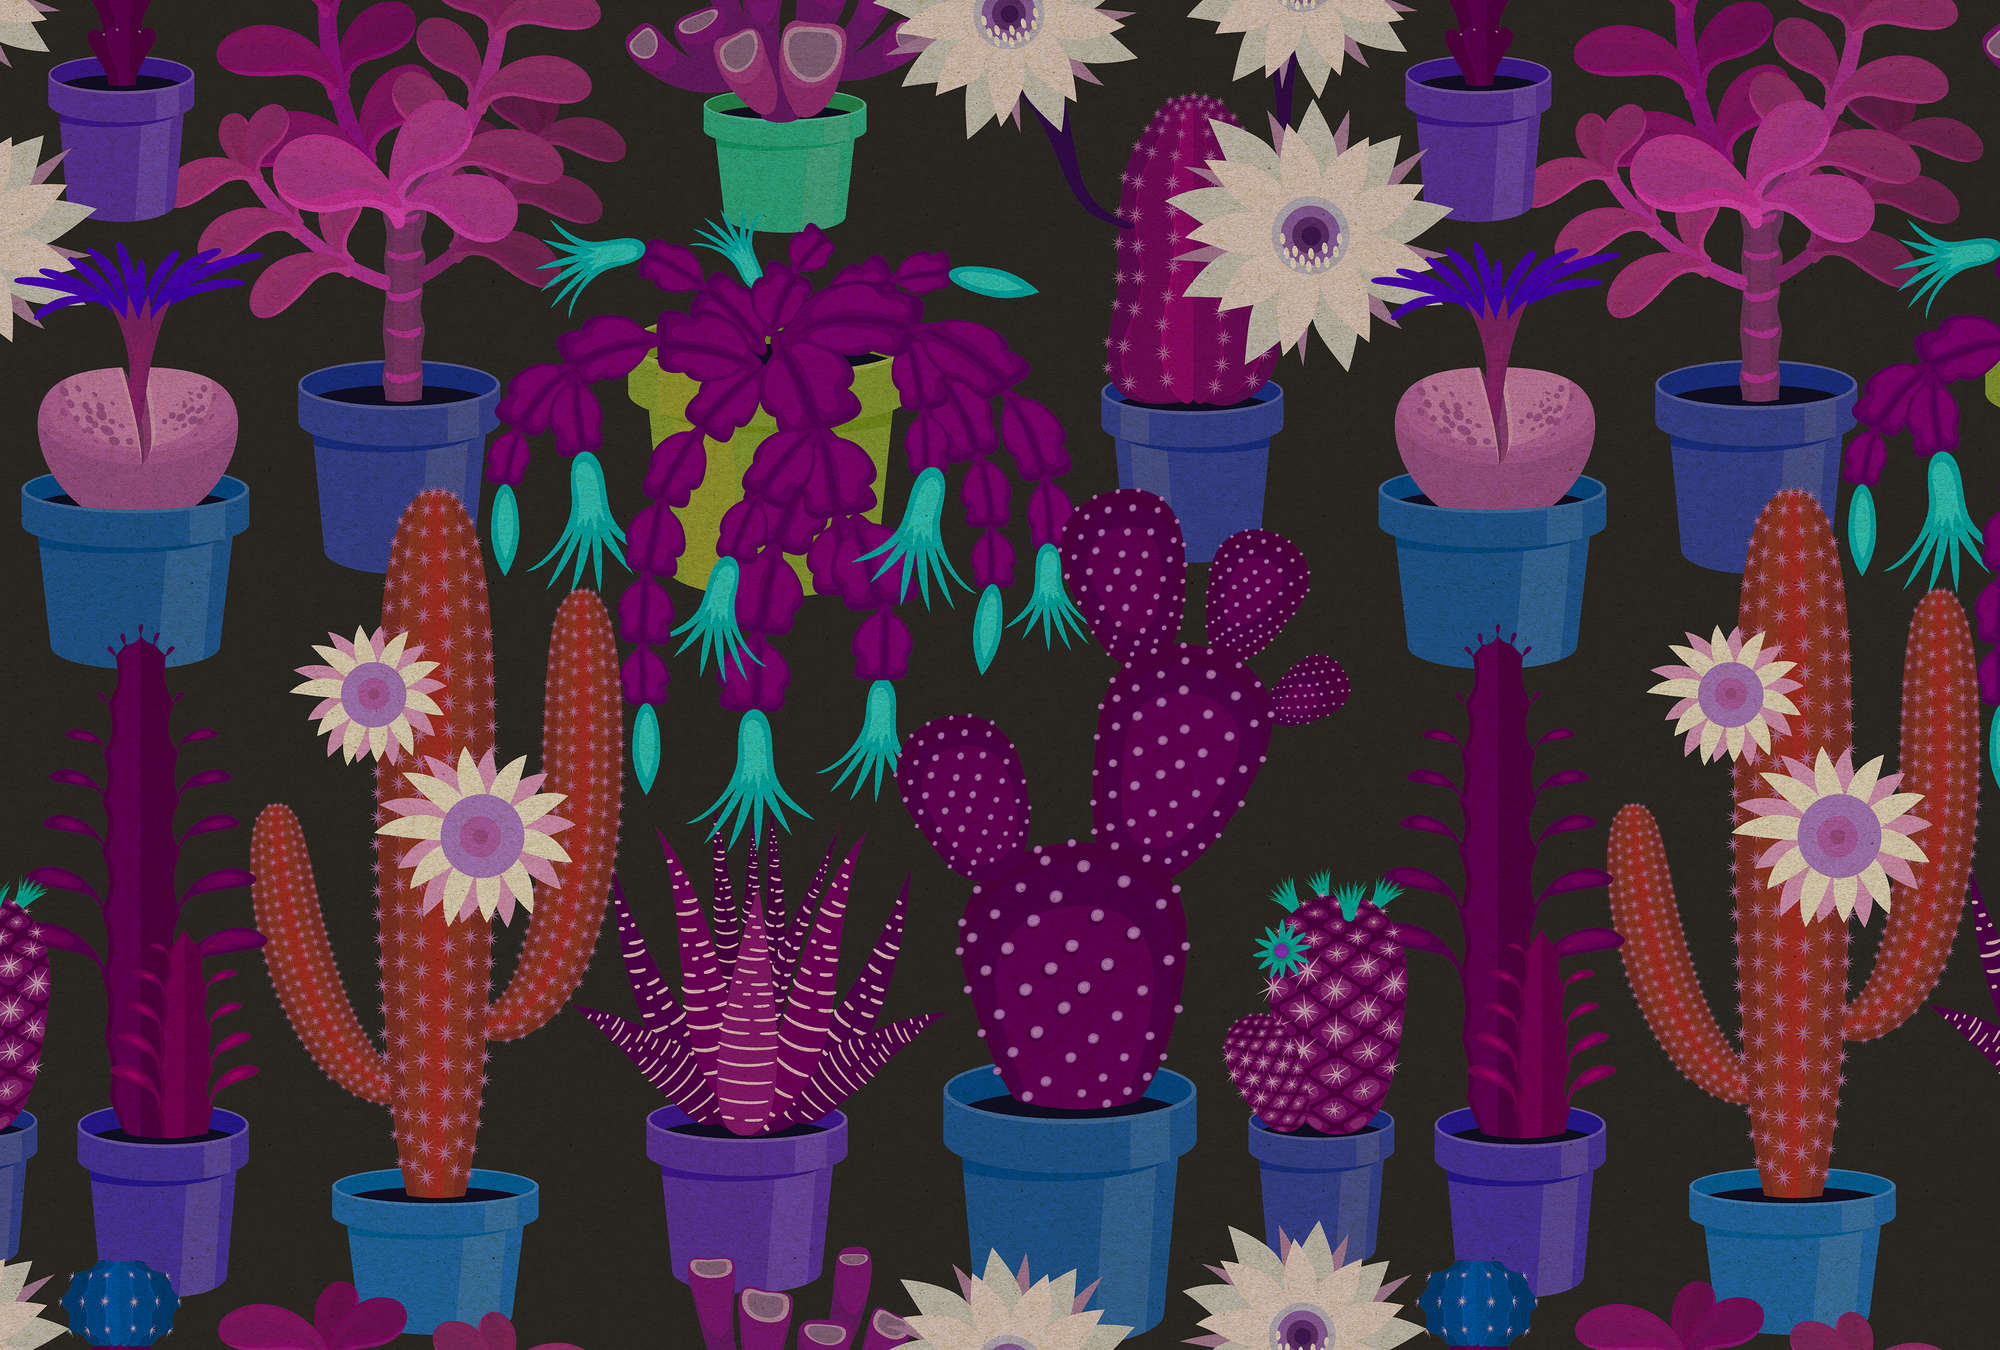             Jardín de cactus 1 - Papel pintado en estructura de cartón con cactus de colores en estilo cómic - Azul, Naranja | Vellón liso Premium
        